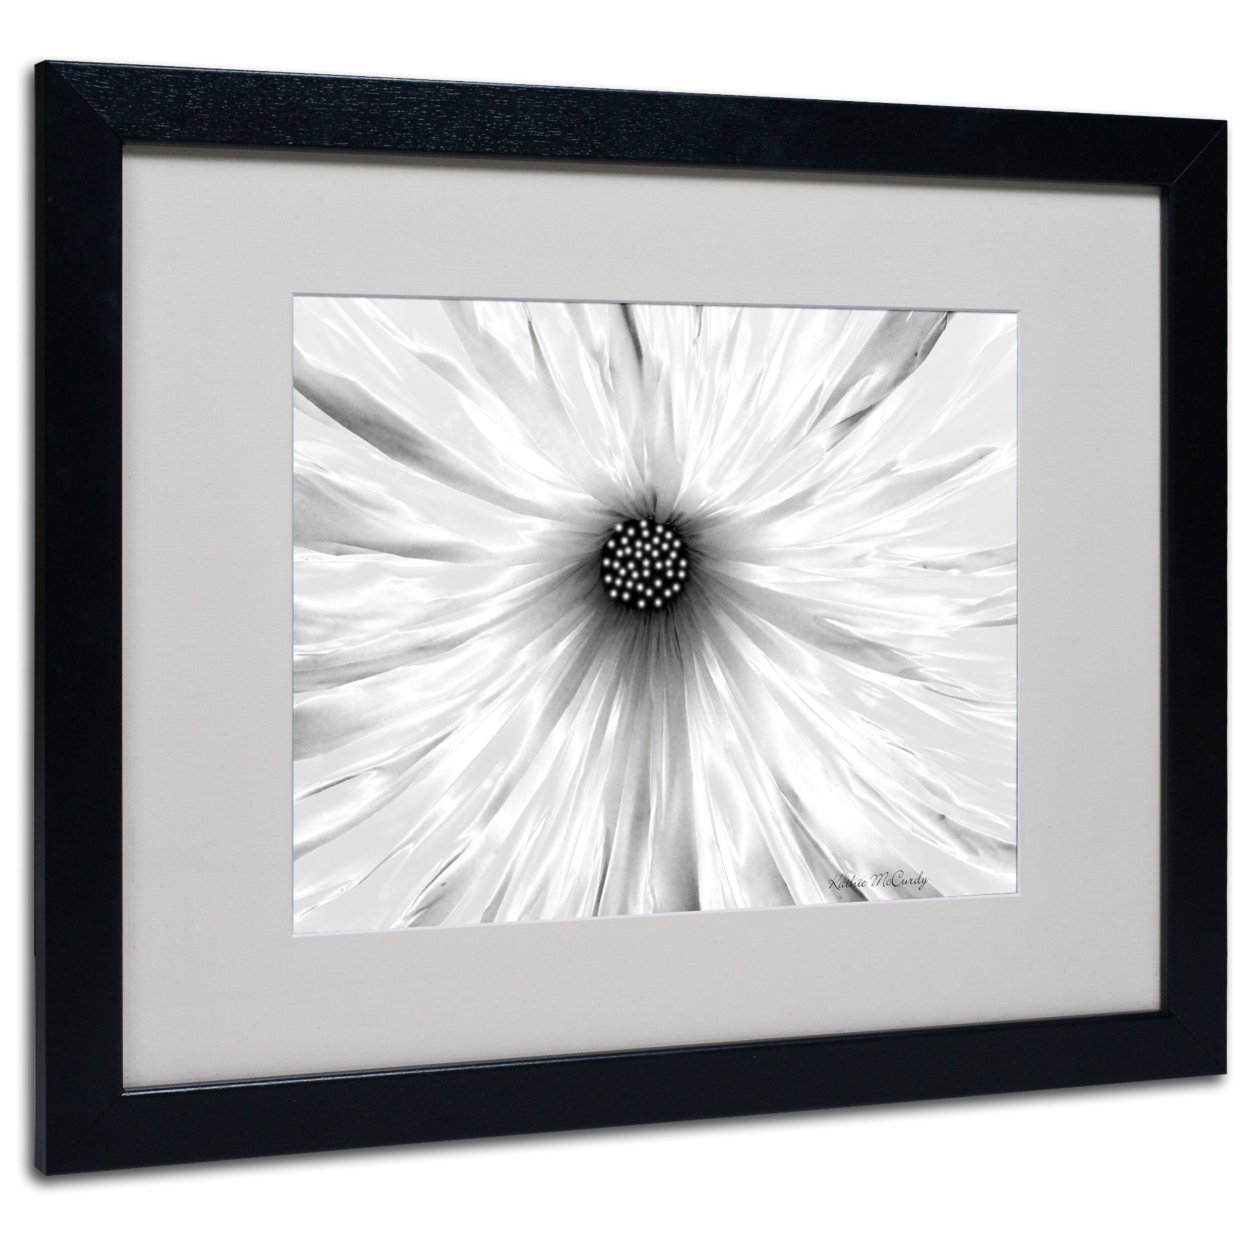 Kathie McCurdy 'White Garden' Black Wooden Framed Art 18 X 22 Inches